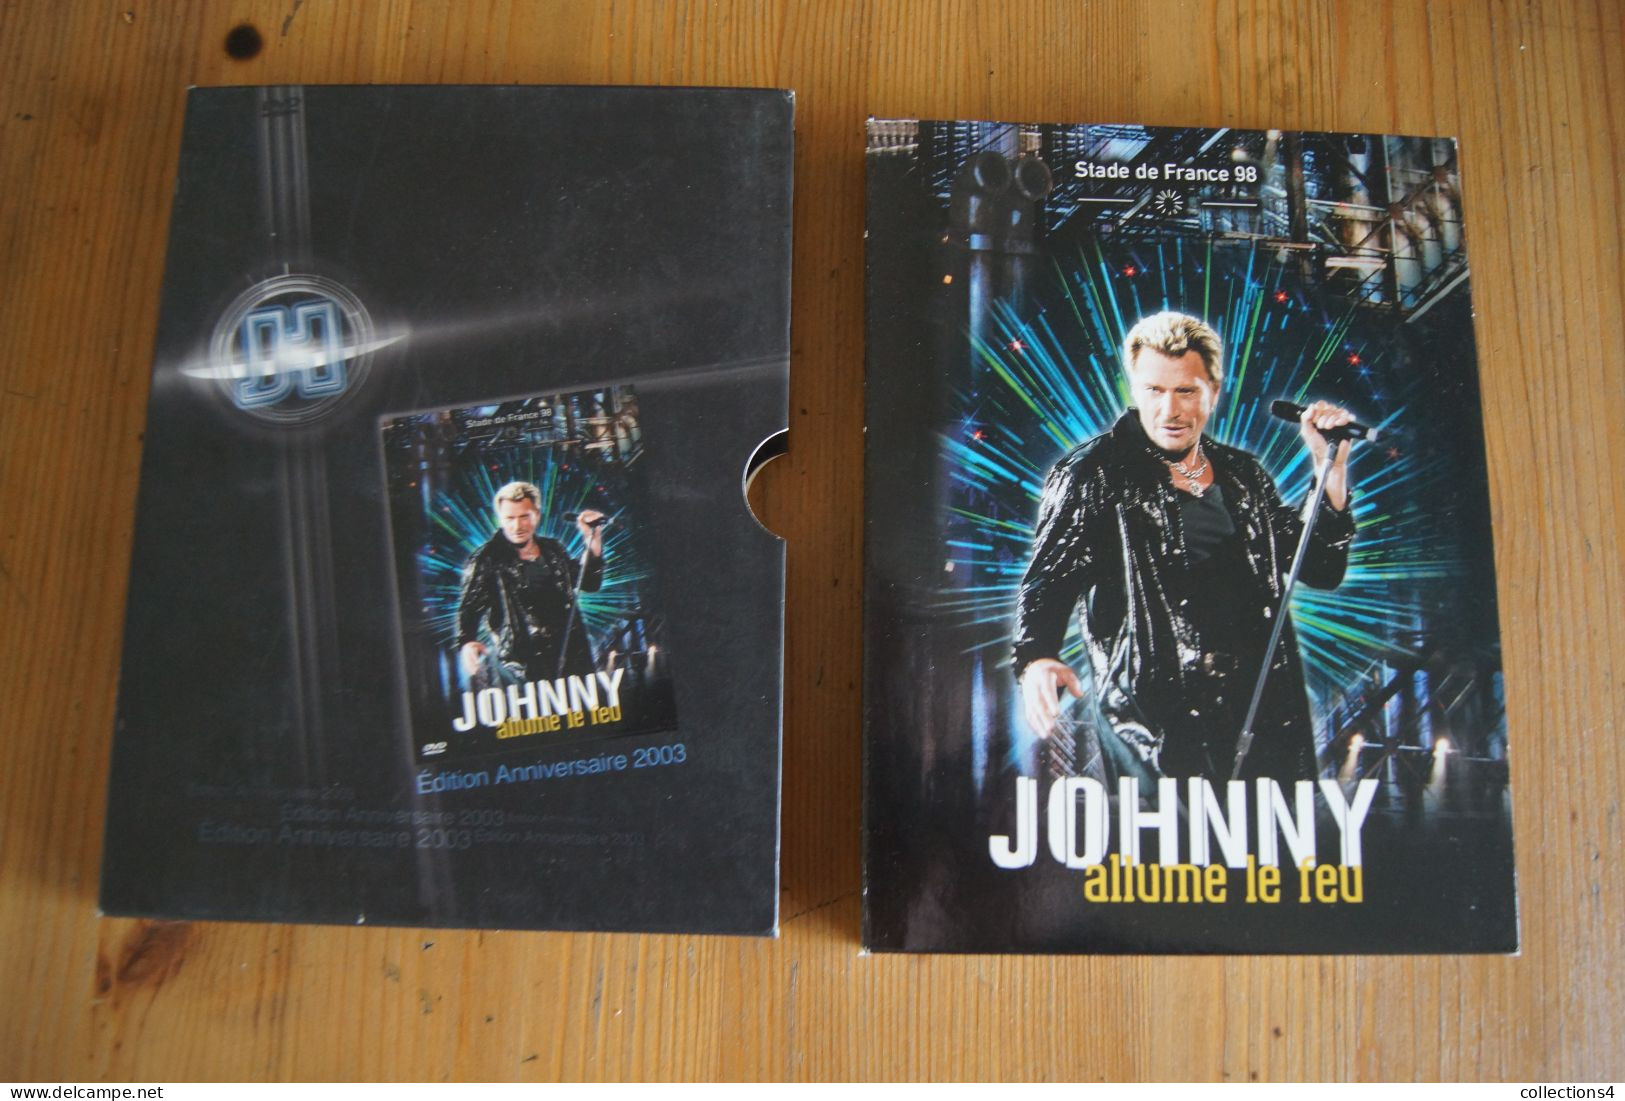 JOHNNY HALLYDAY ALLUME LE FEU EDITION ANNIVERSAIRE 2003 COFFRET 2 DVD VALEUR + - DVD Musicales